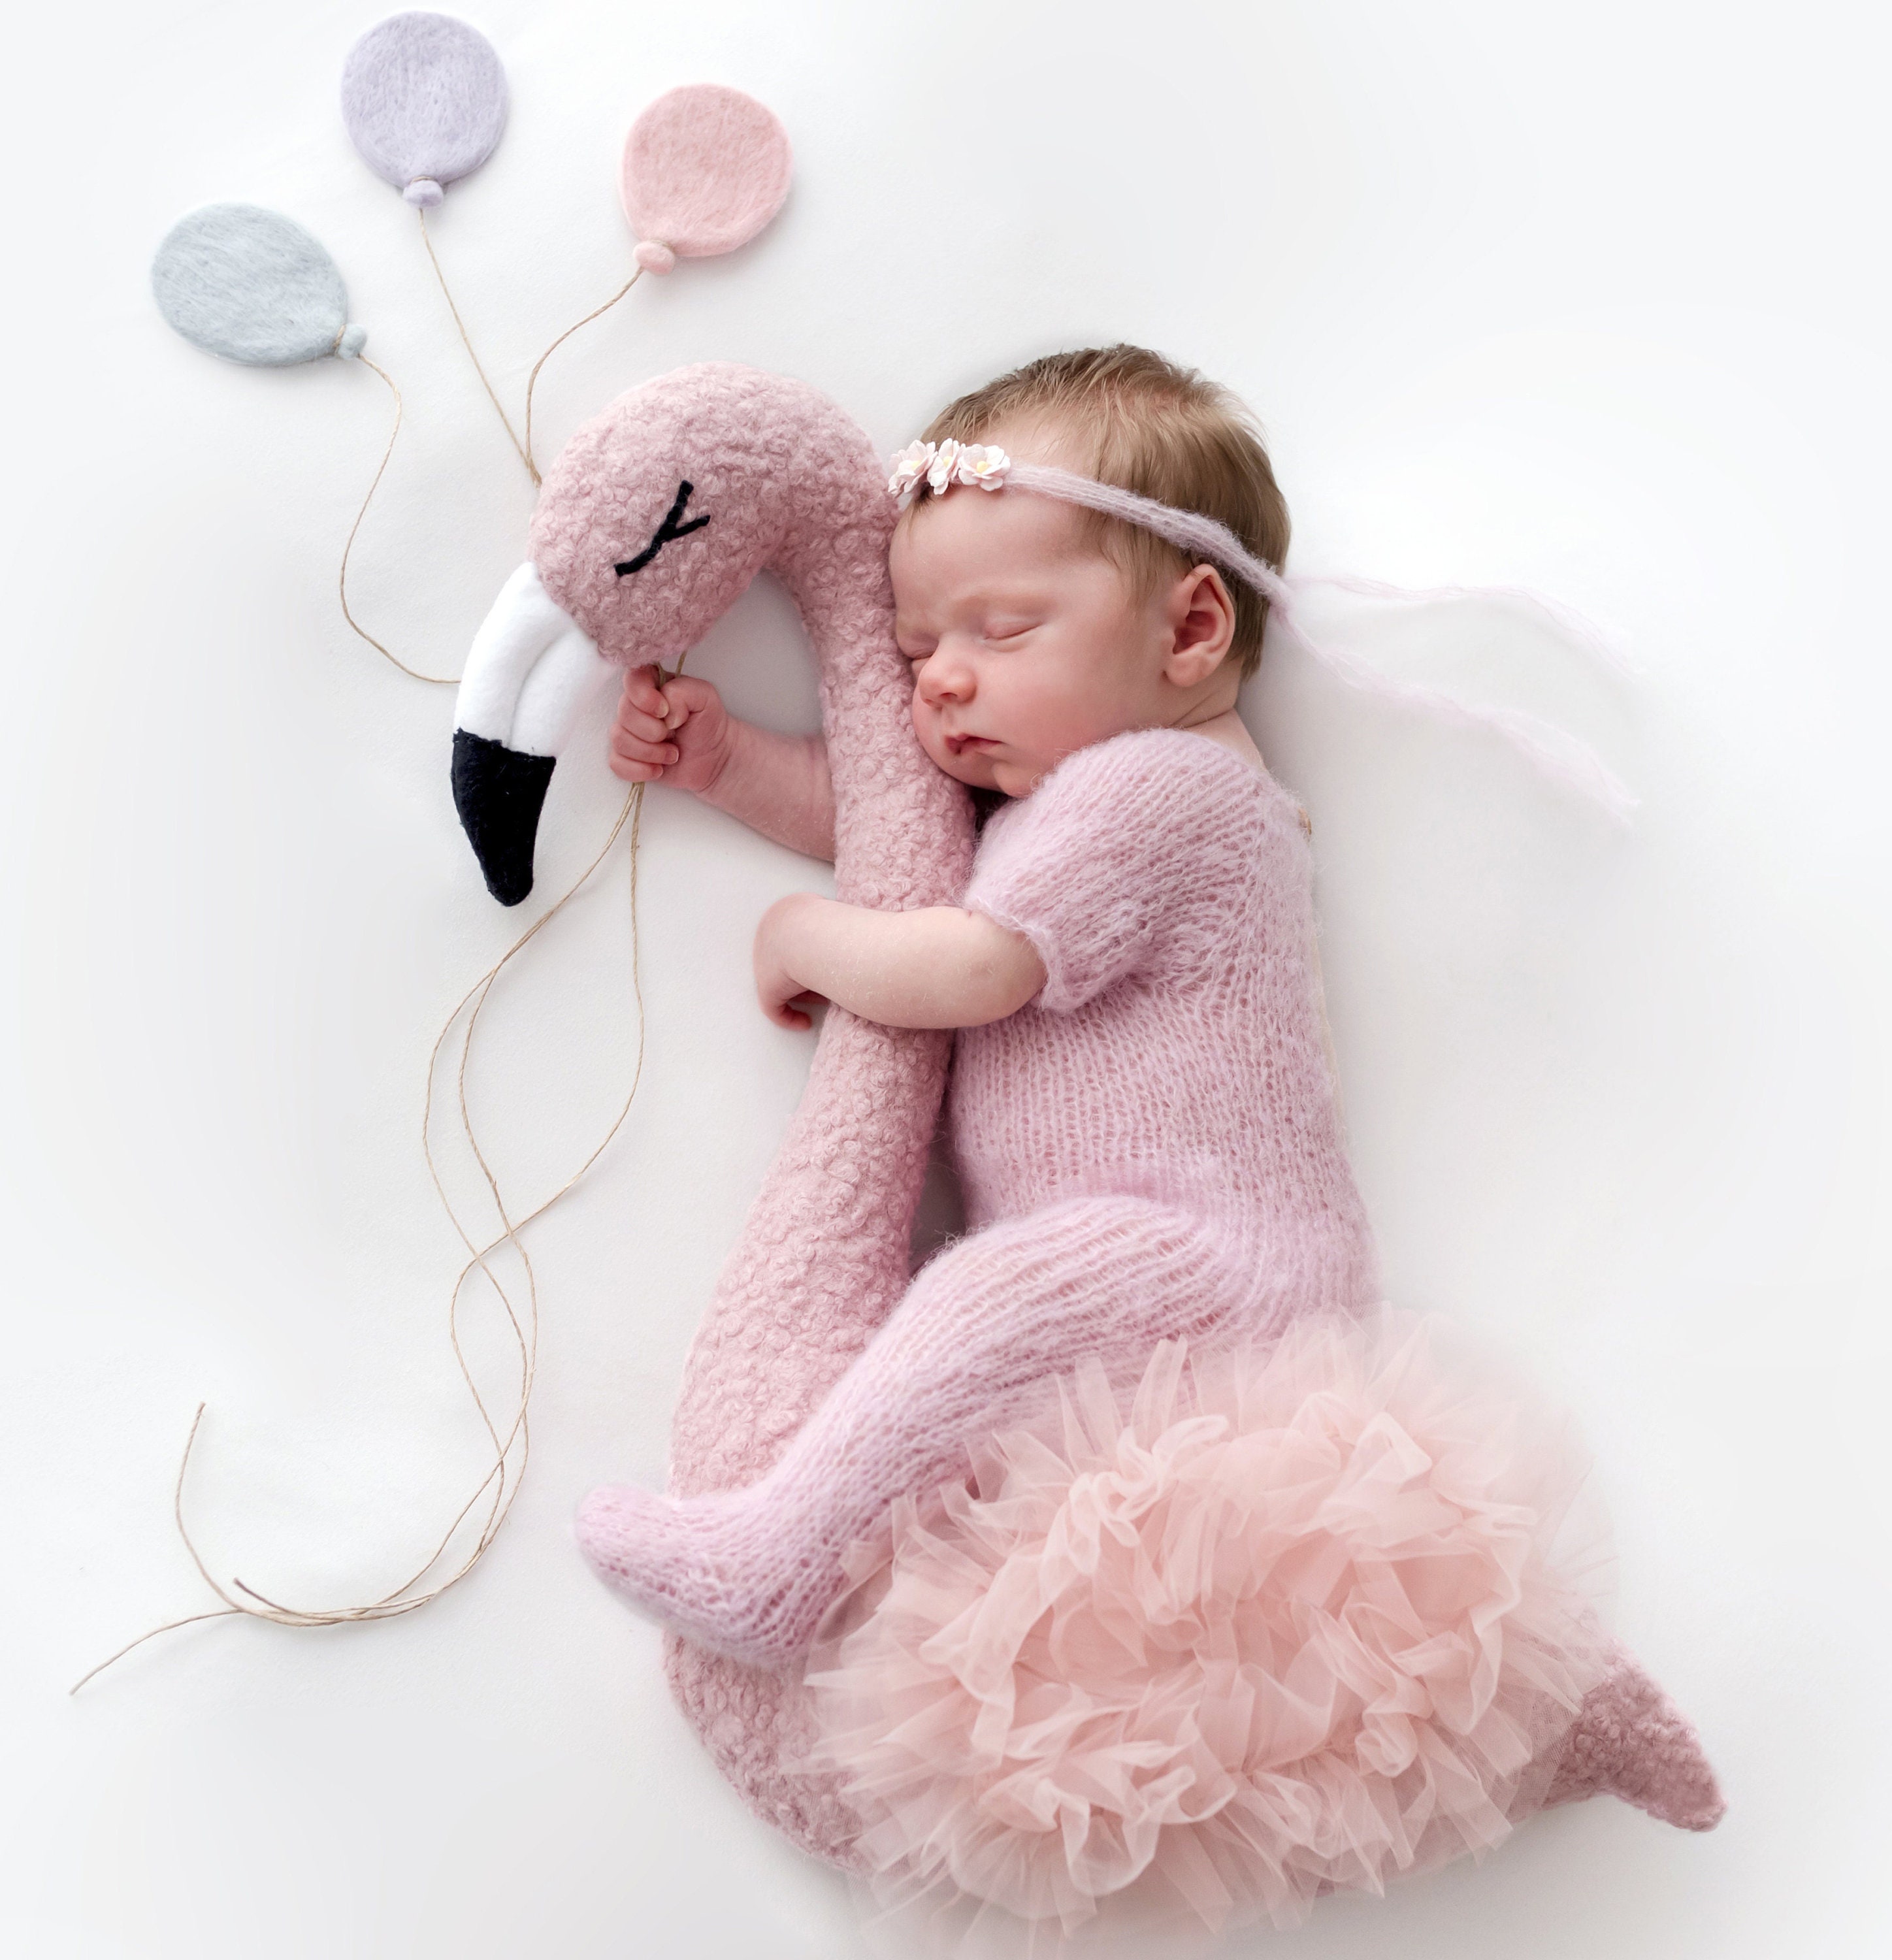 newborn photography packages - Melissa DeVoe Photography